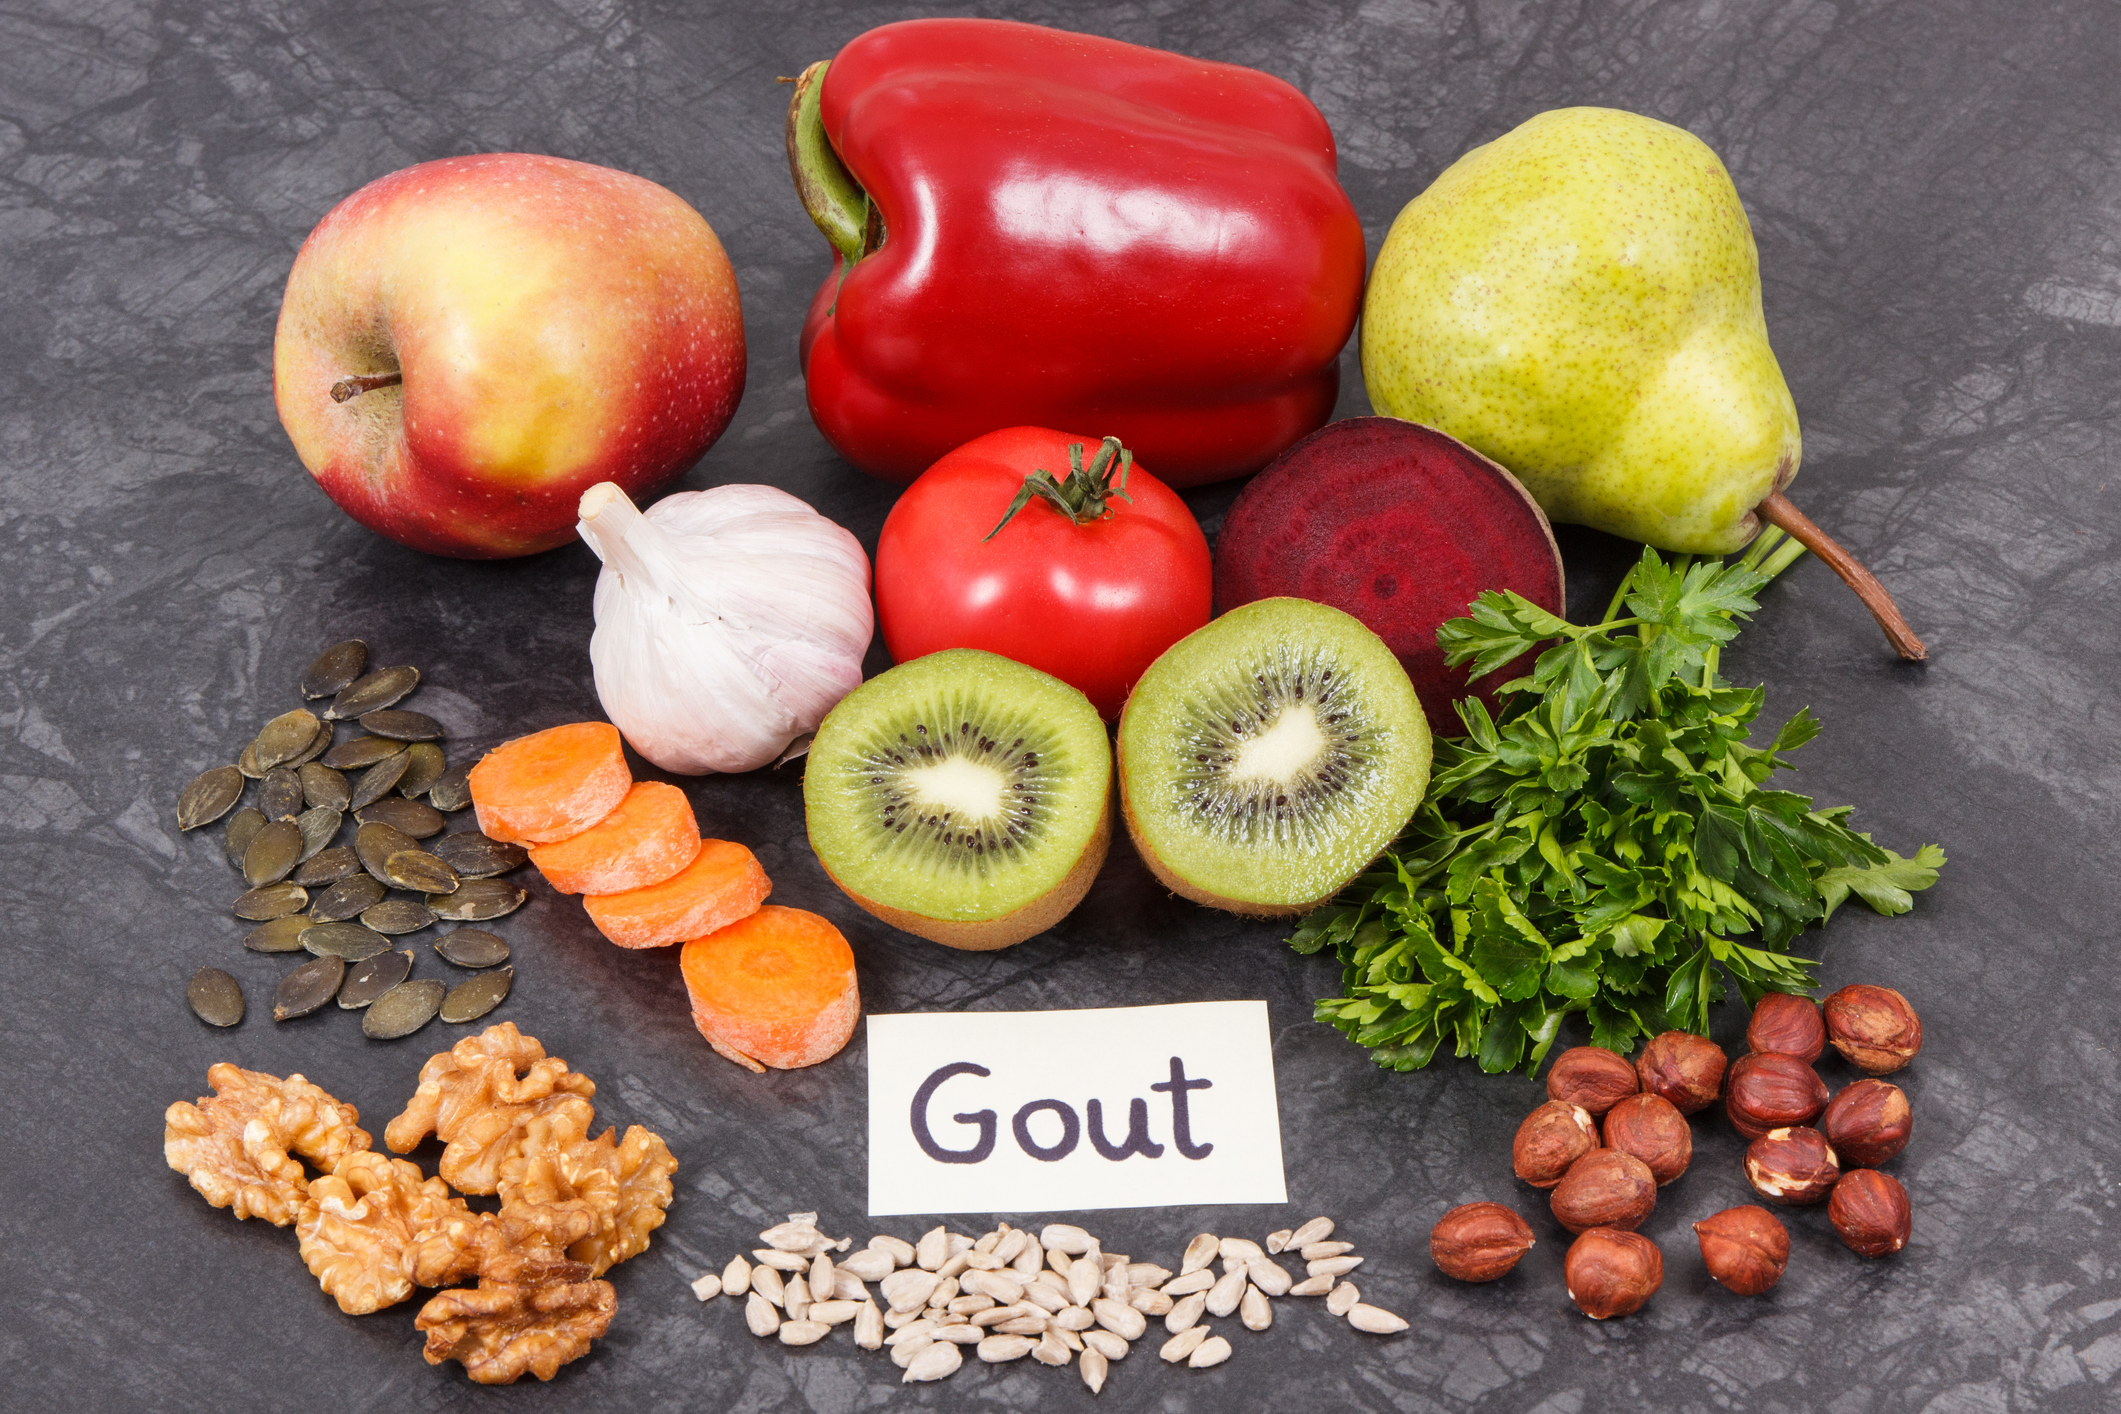 Aggressive Serum Urate Lowering Meets Goals in Gout